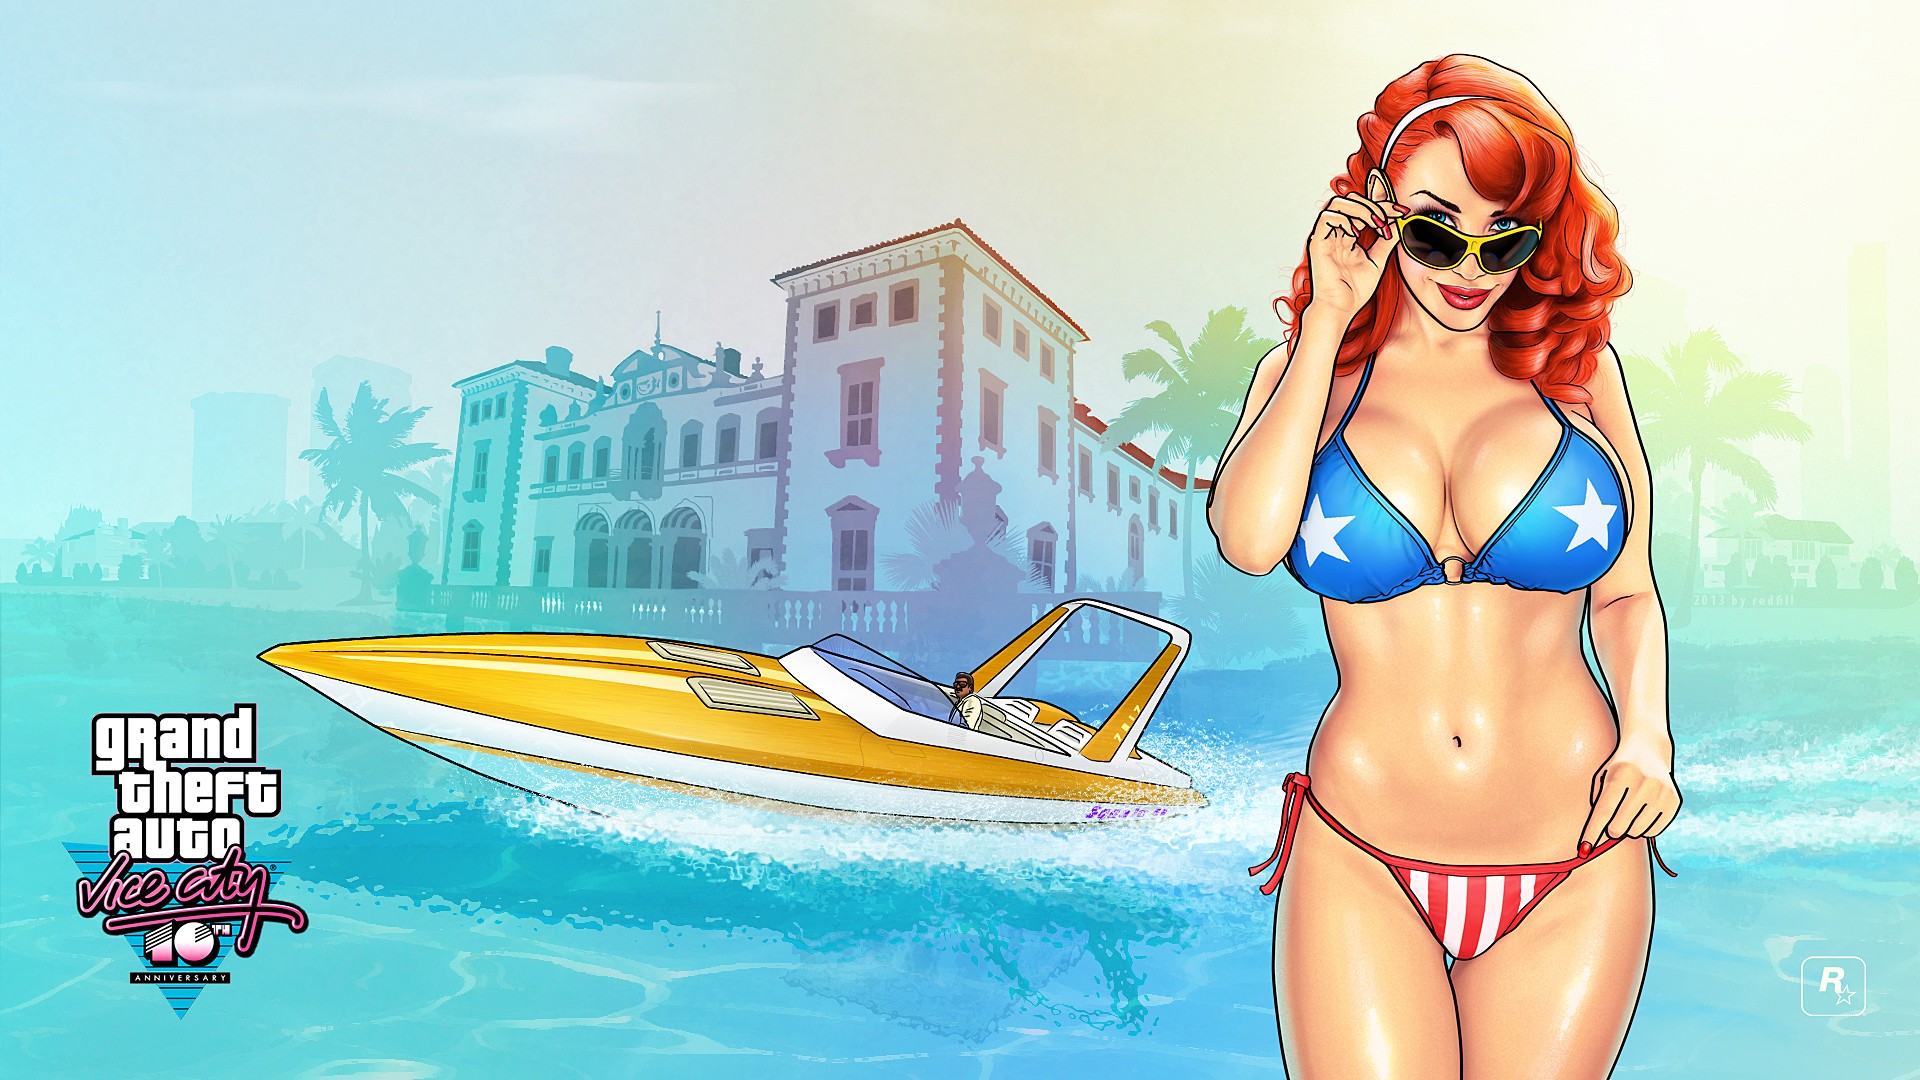 General 1920x1080 Grand Theft Auto boat USA bikini Grand Theft Auto: Vice City big boobs redhead women Rockstar Games boobs belly women with shades sunglasses curvy vehicle video game art standing